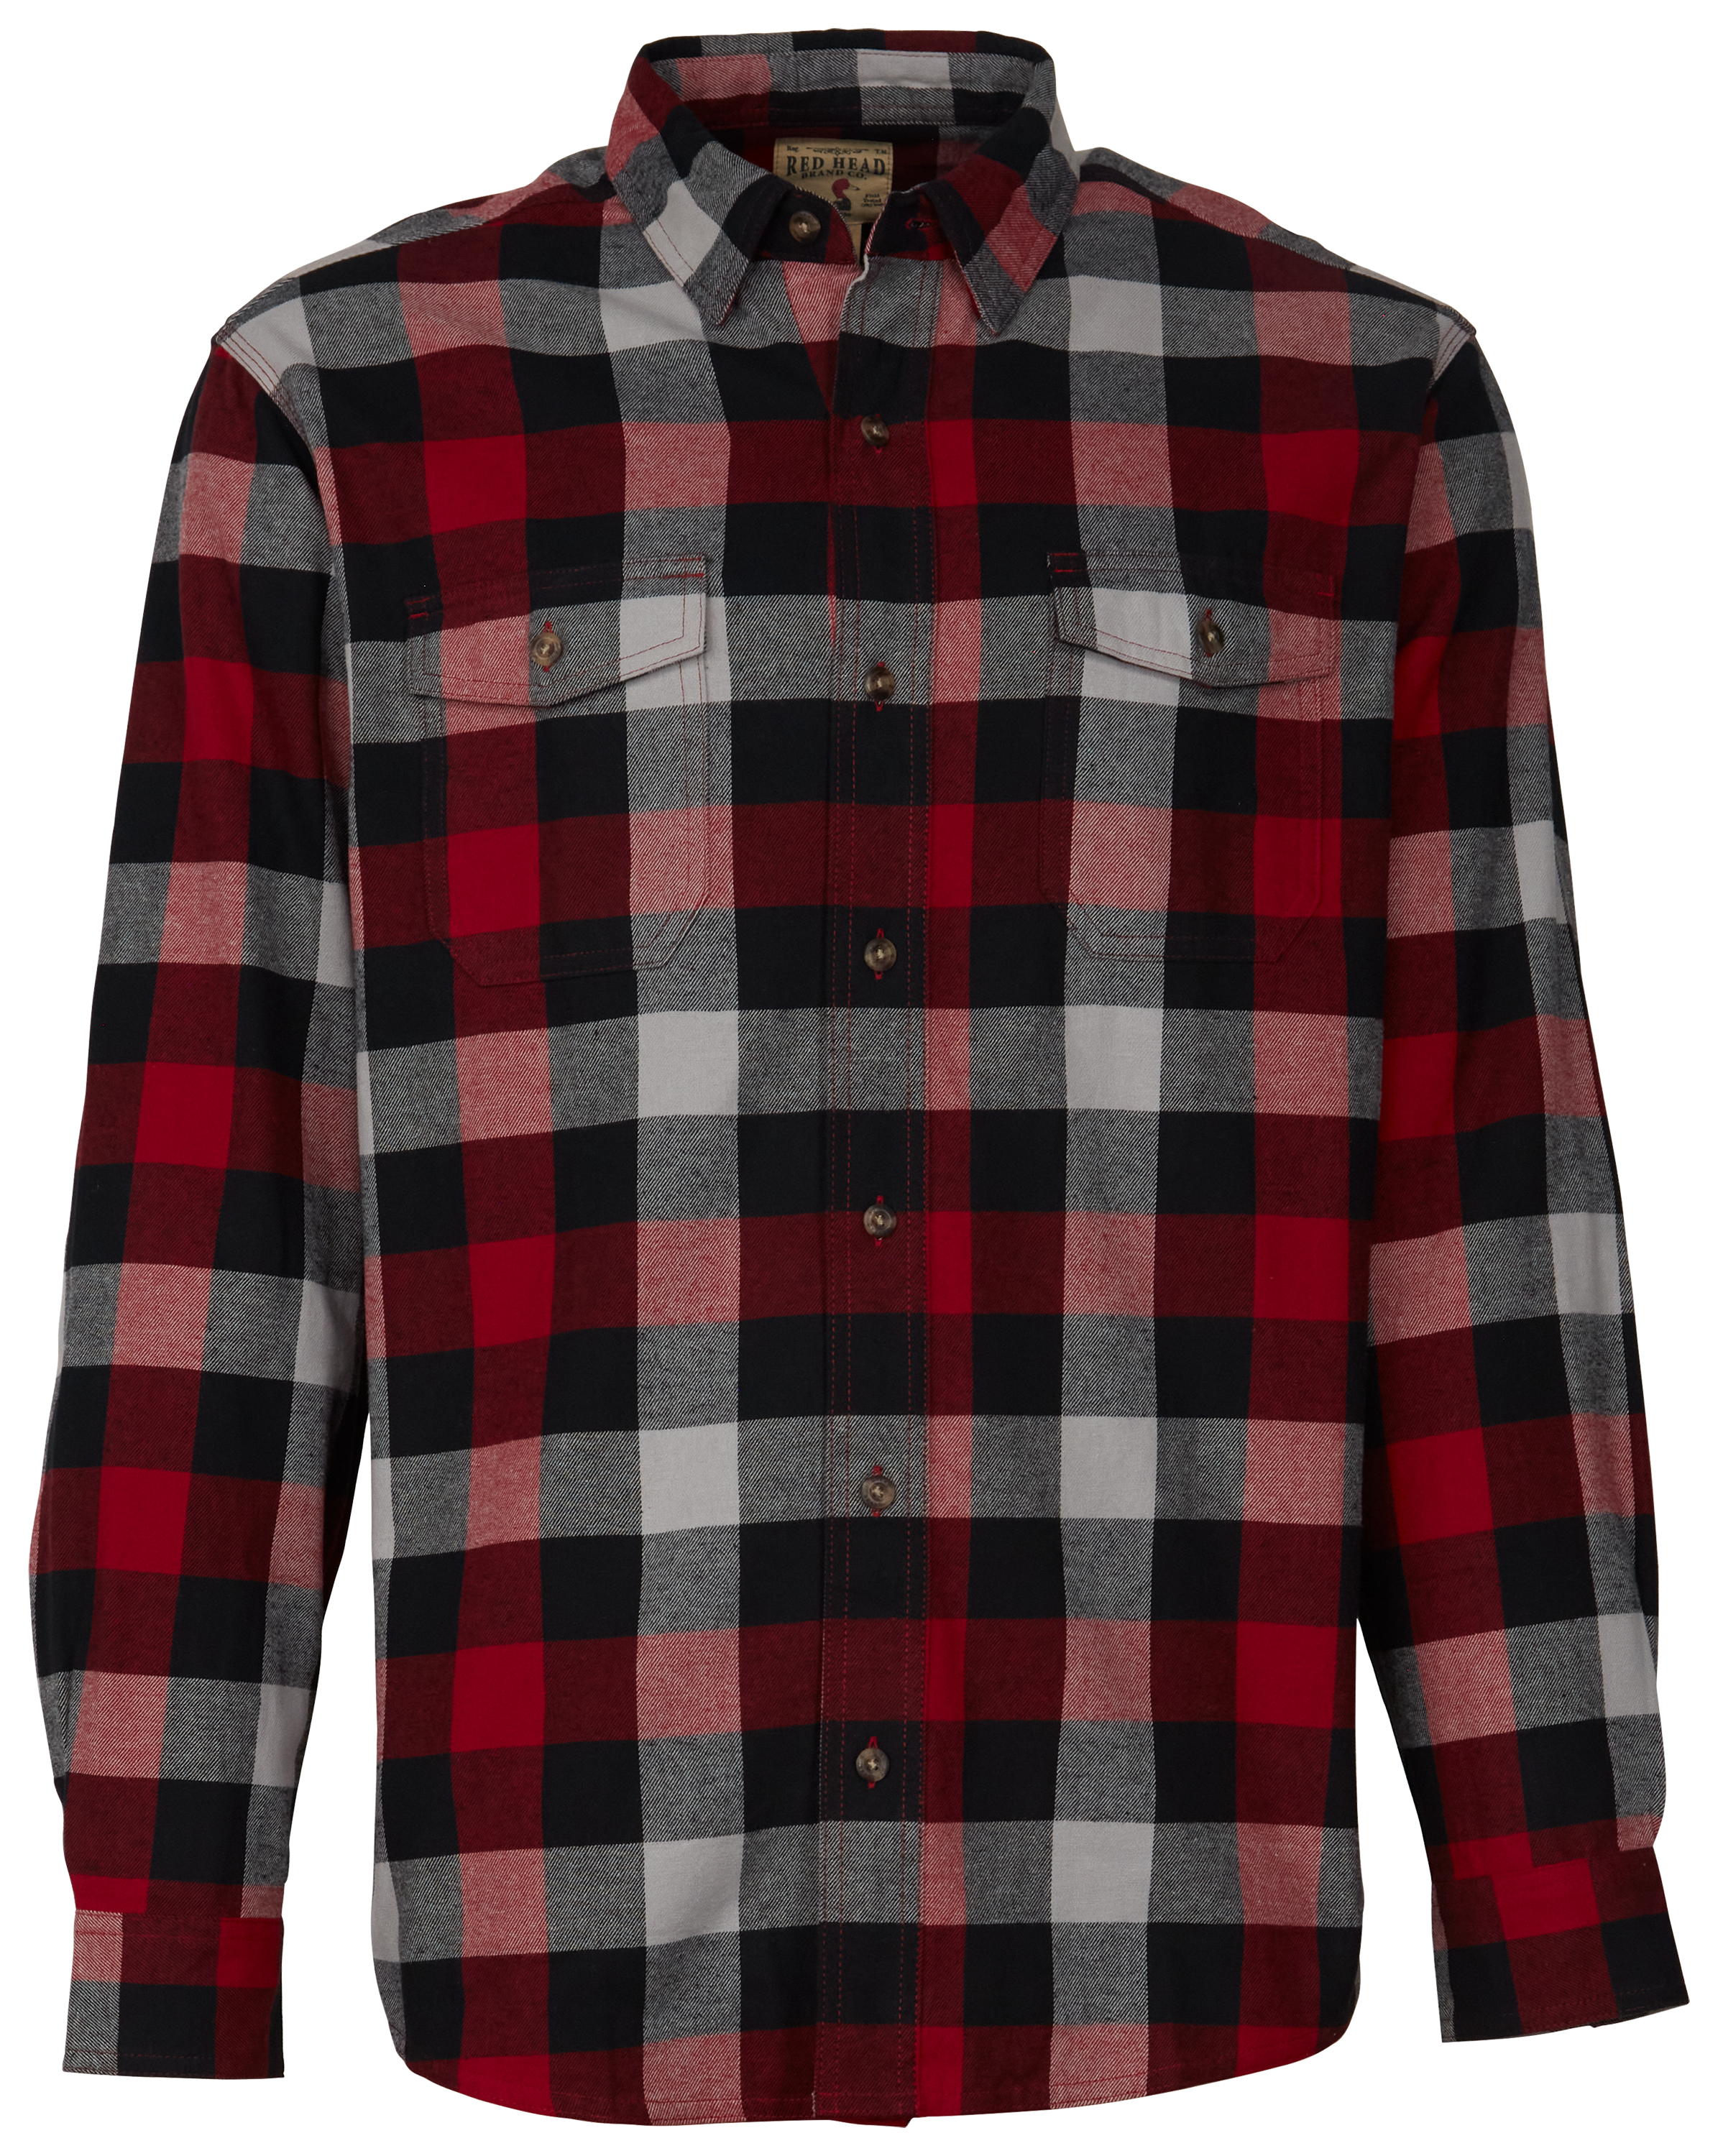 RedHead Buffalo Creek Flannel Long-Sleeve Shirt for Men - Red/Gray - XL